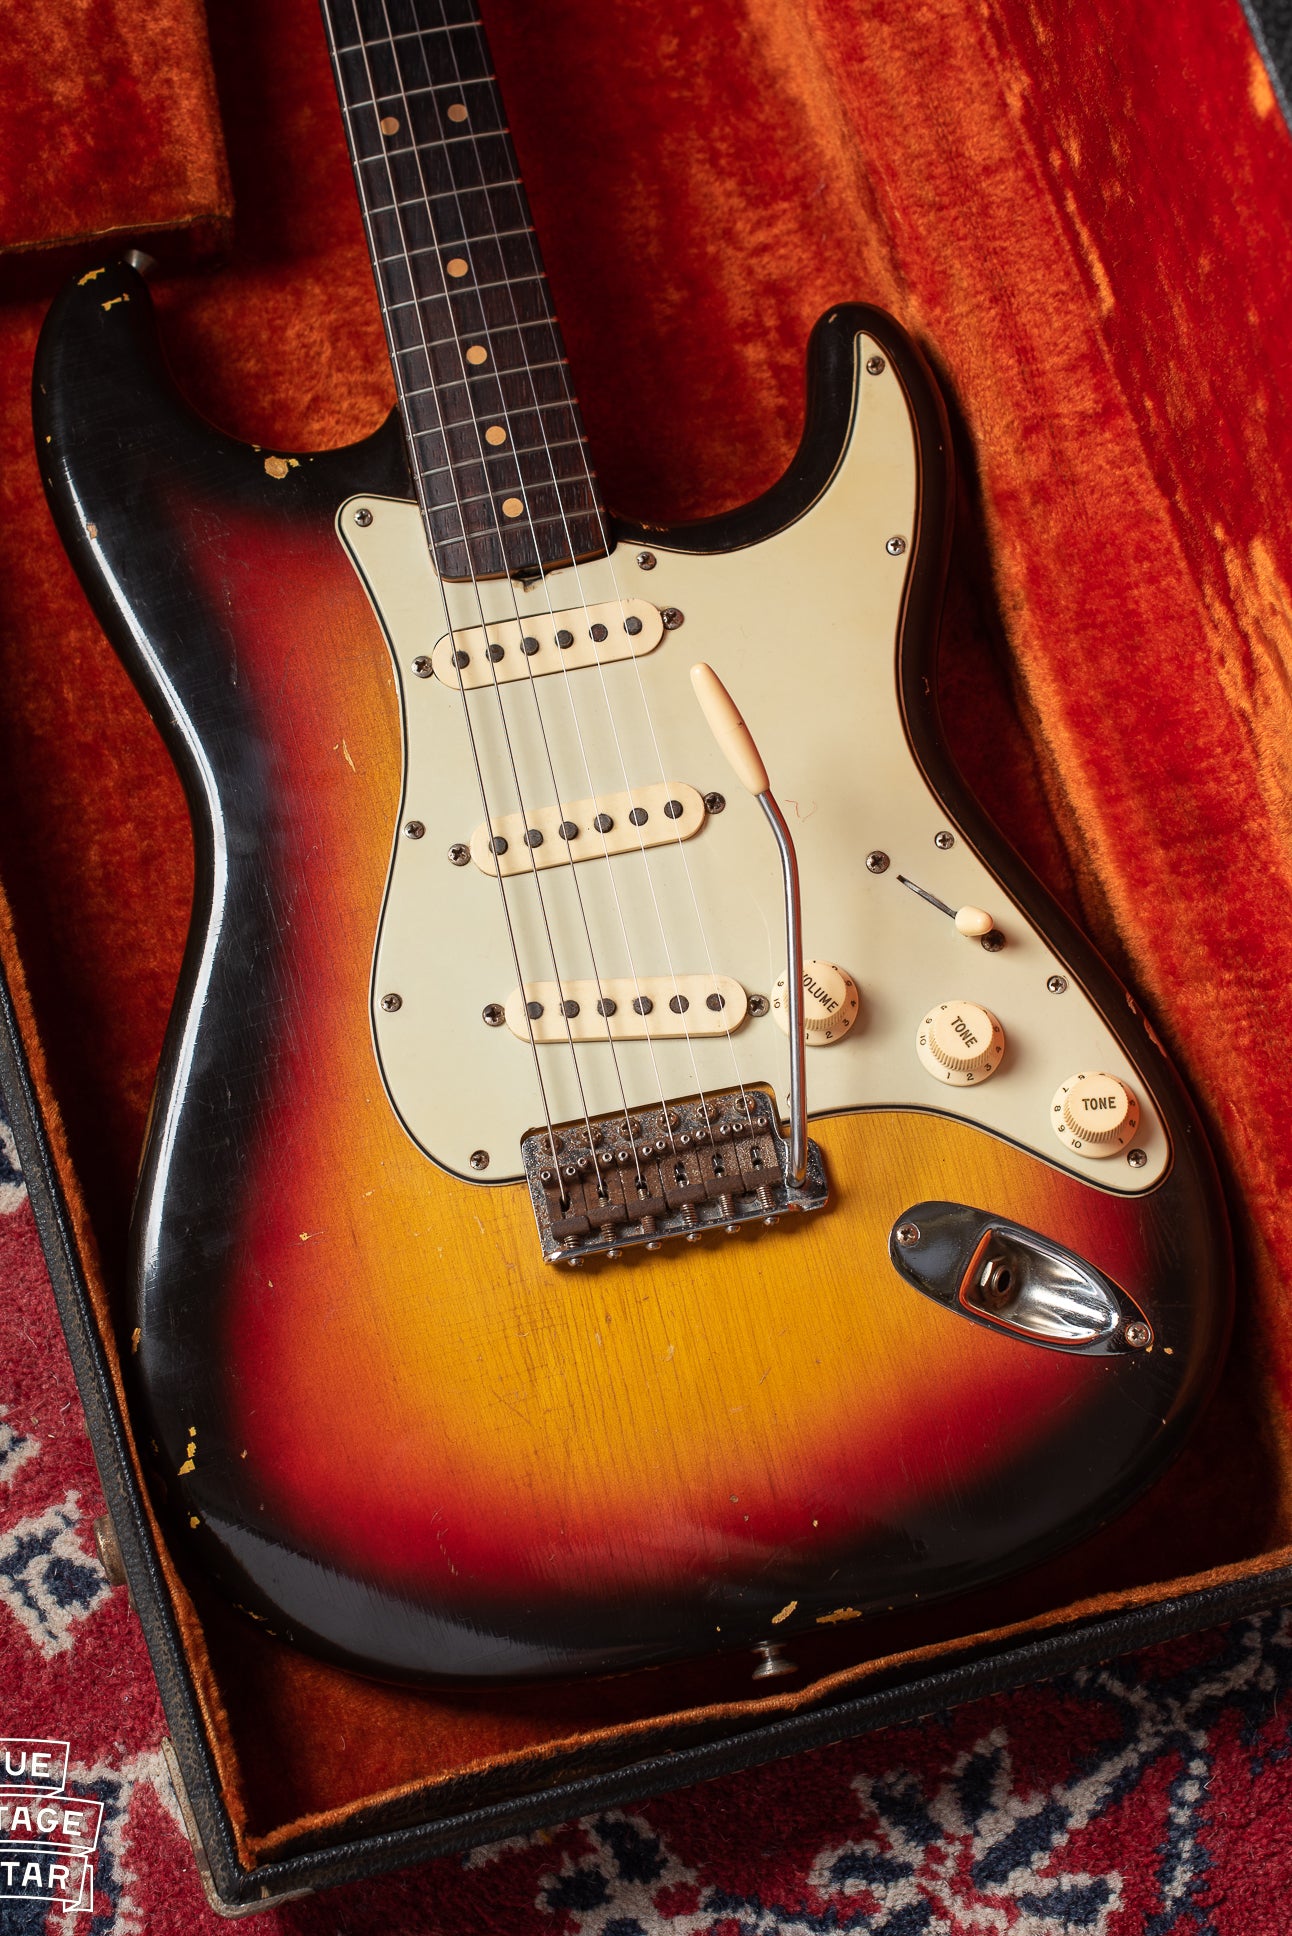 Fender Stratocaster 1963 body in case